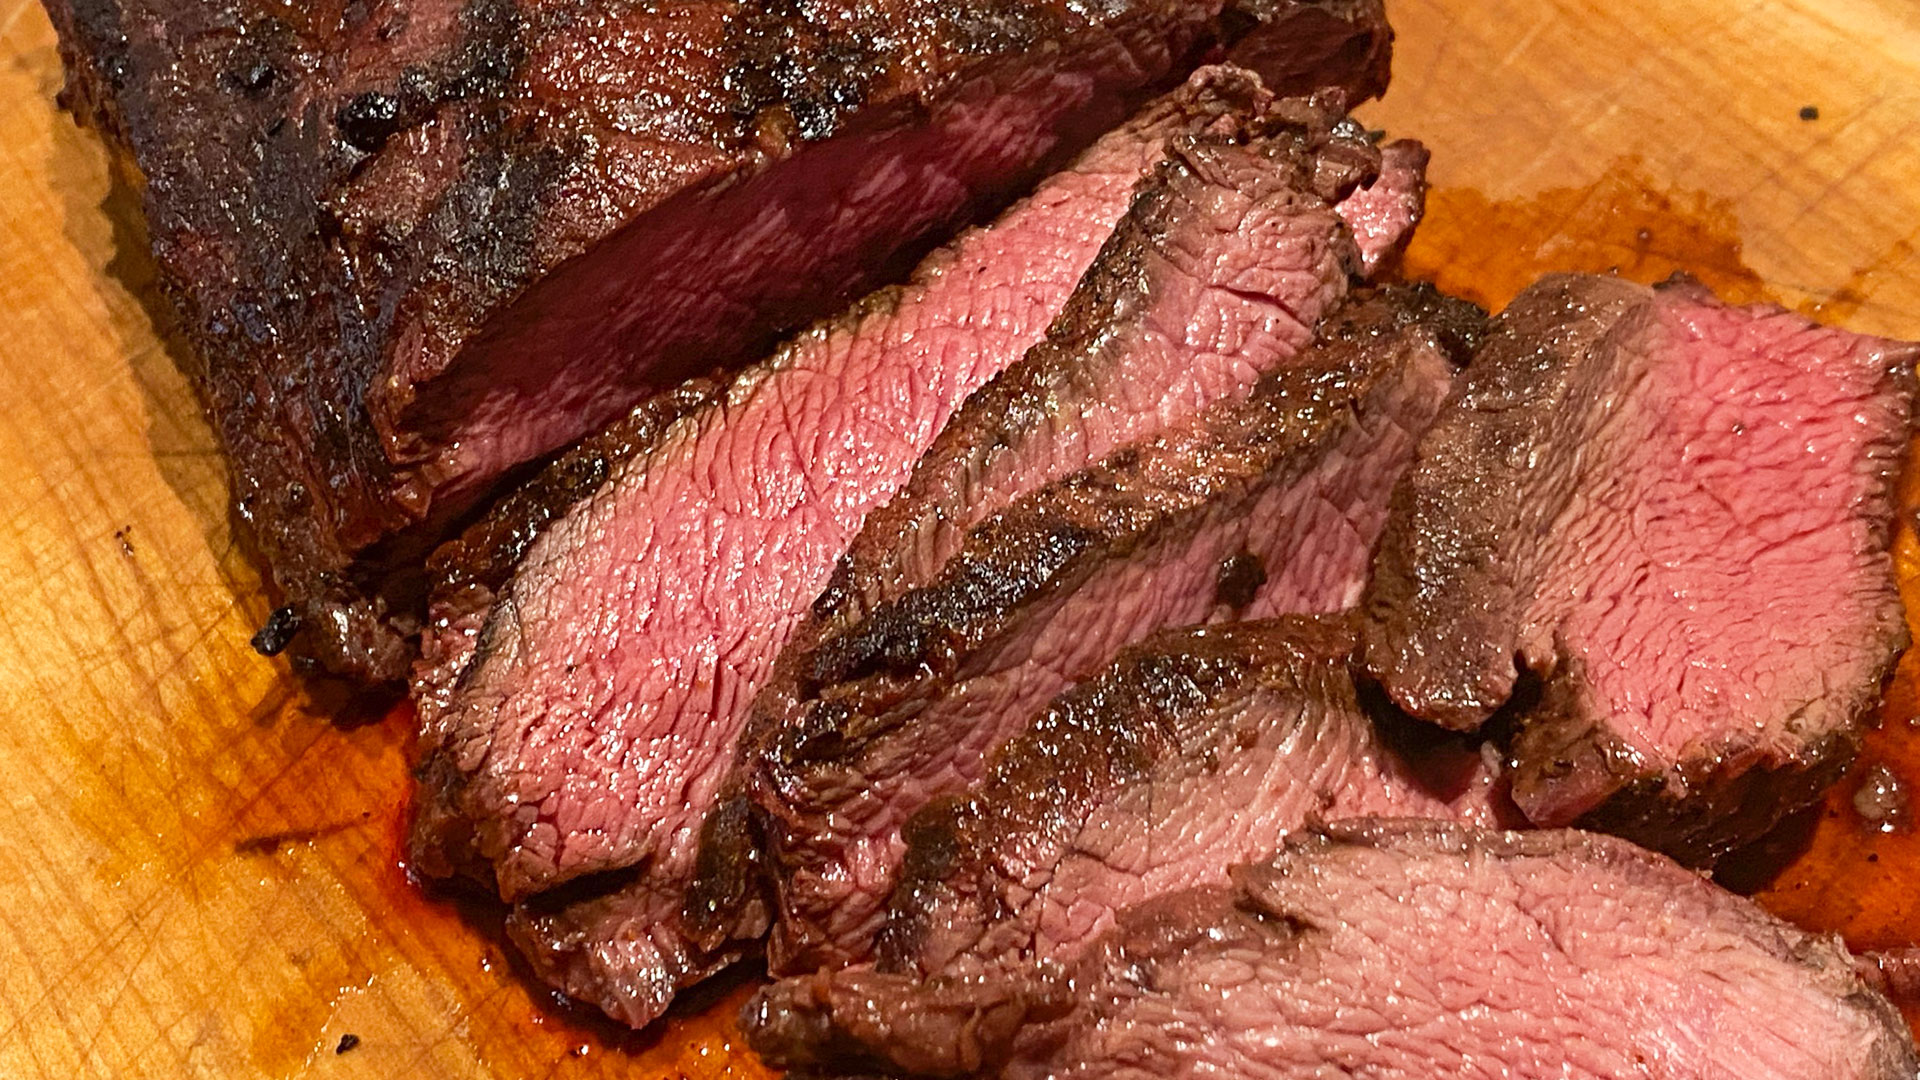 Perfect Flat Iron Steak Recipe